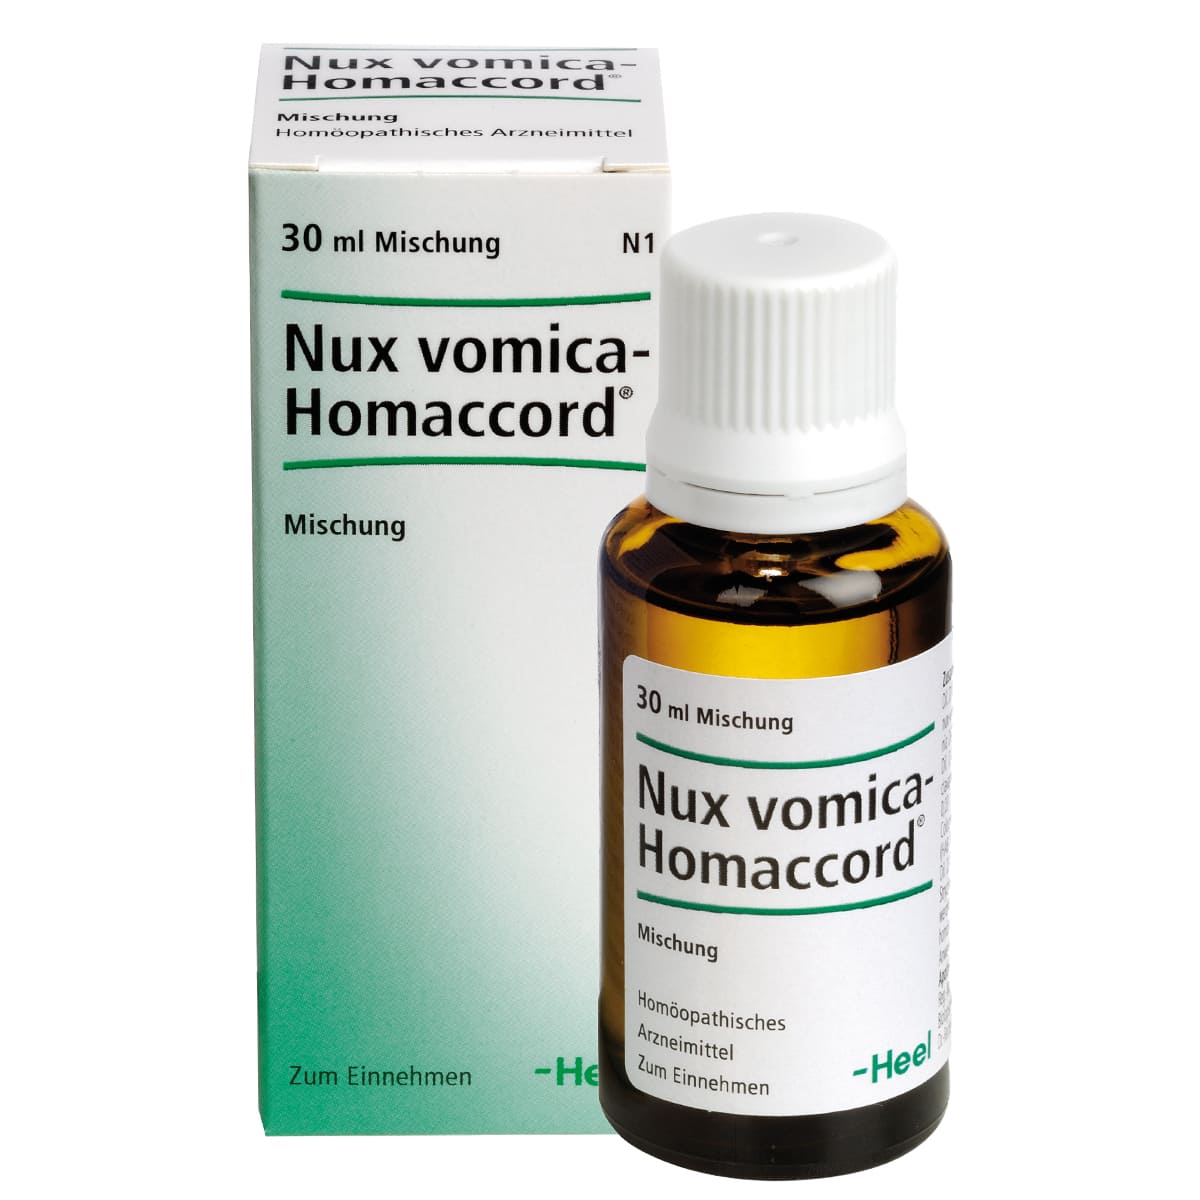 Nux vomica-homaccord